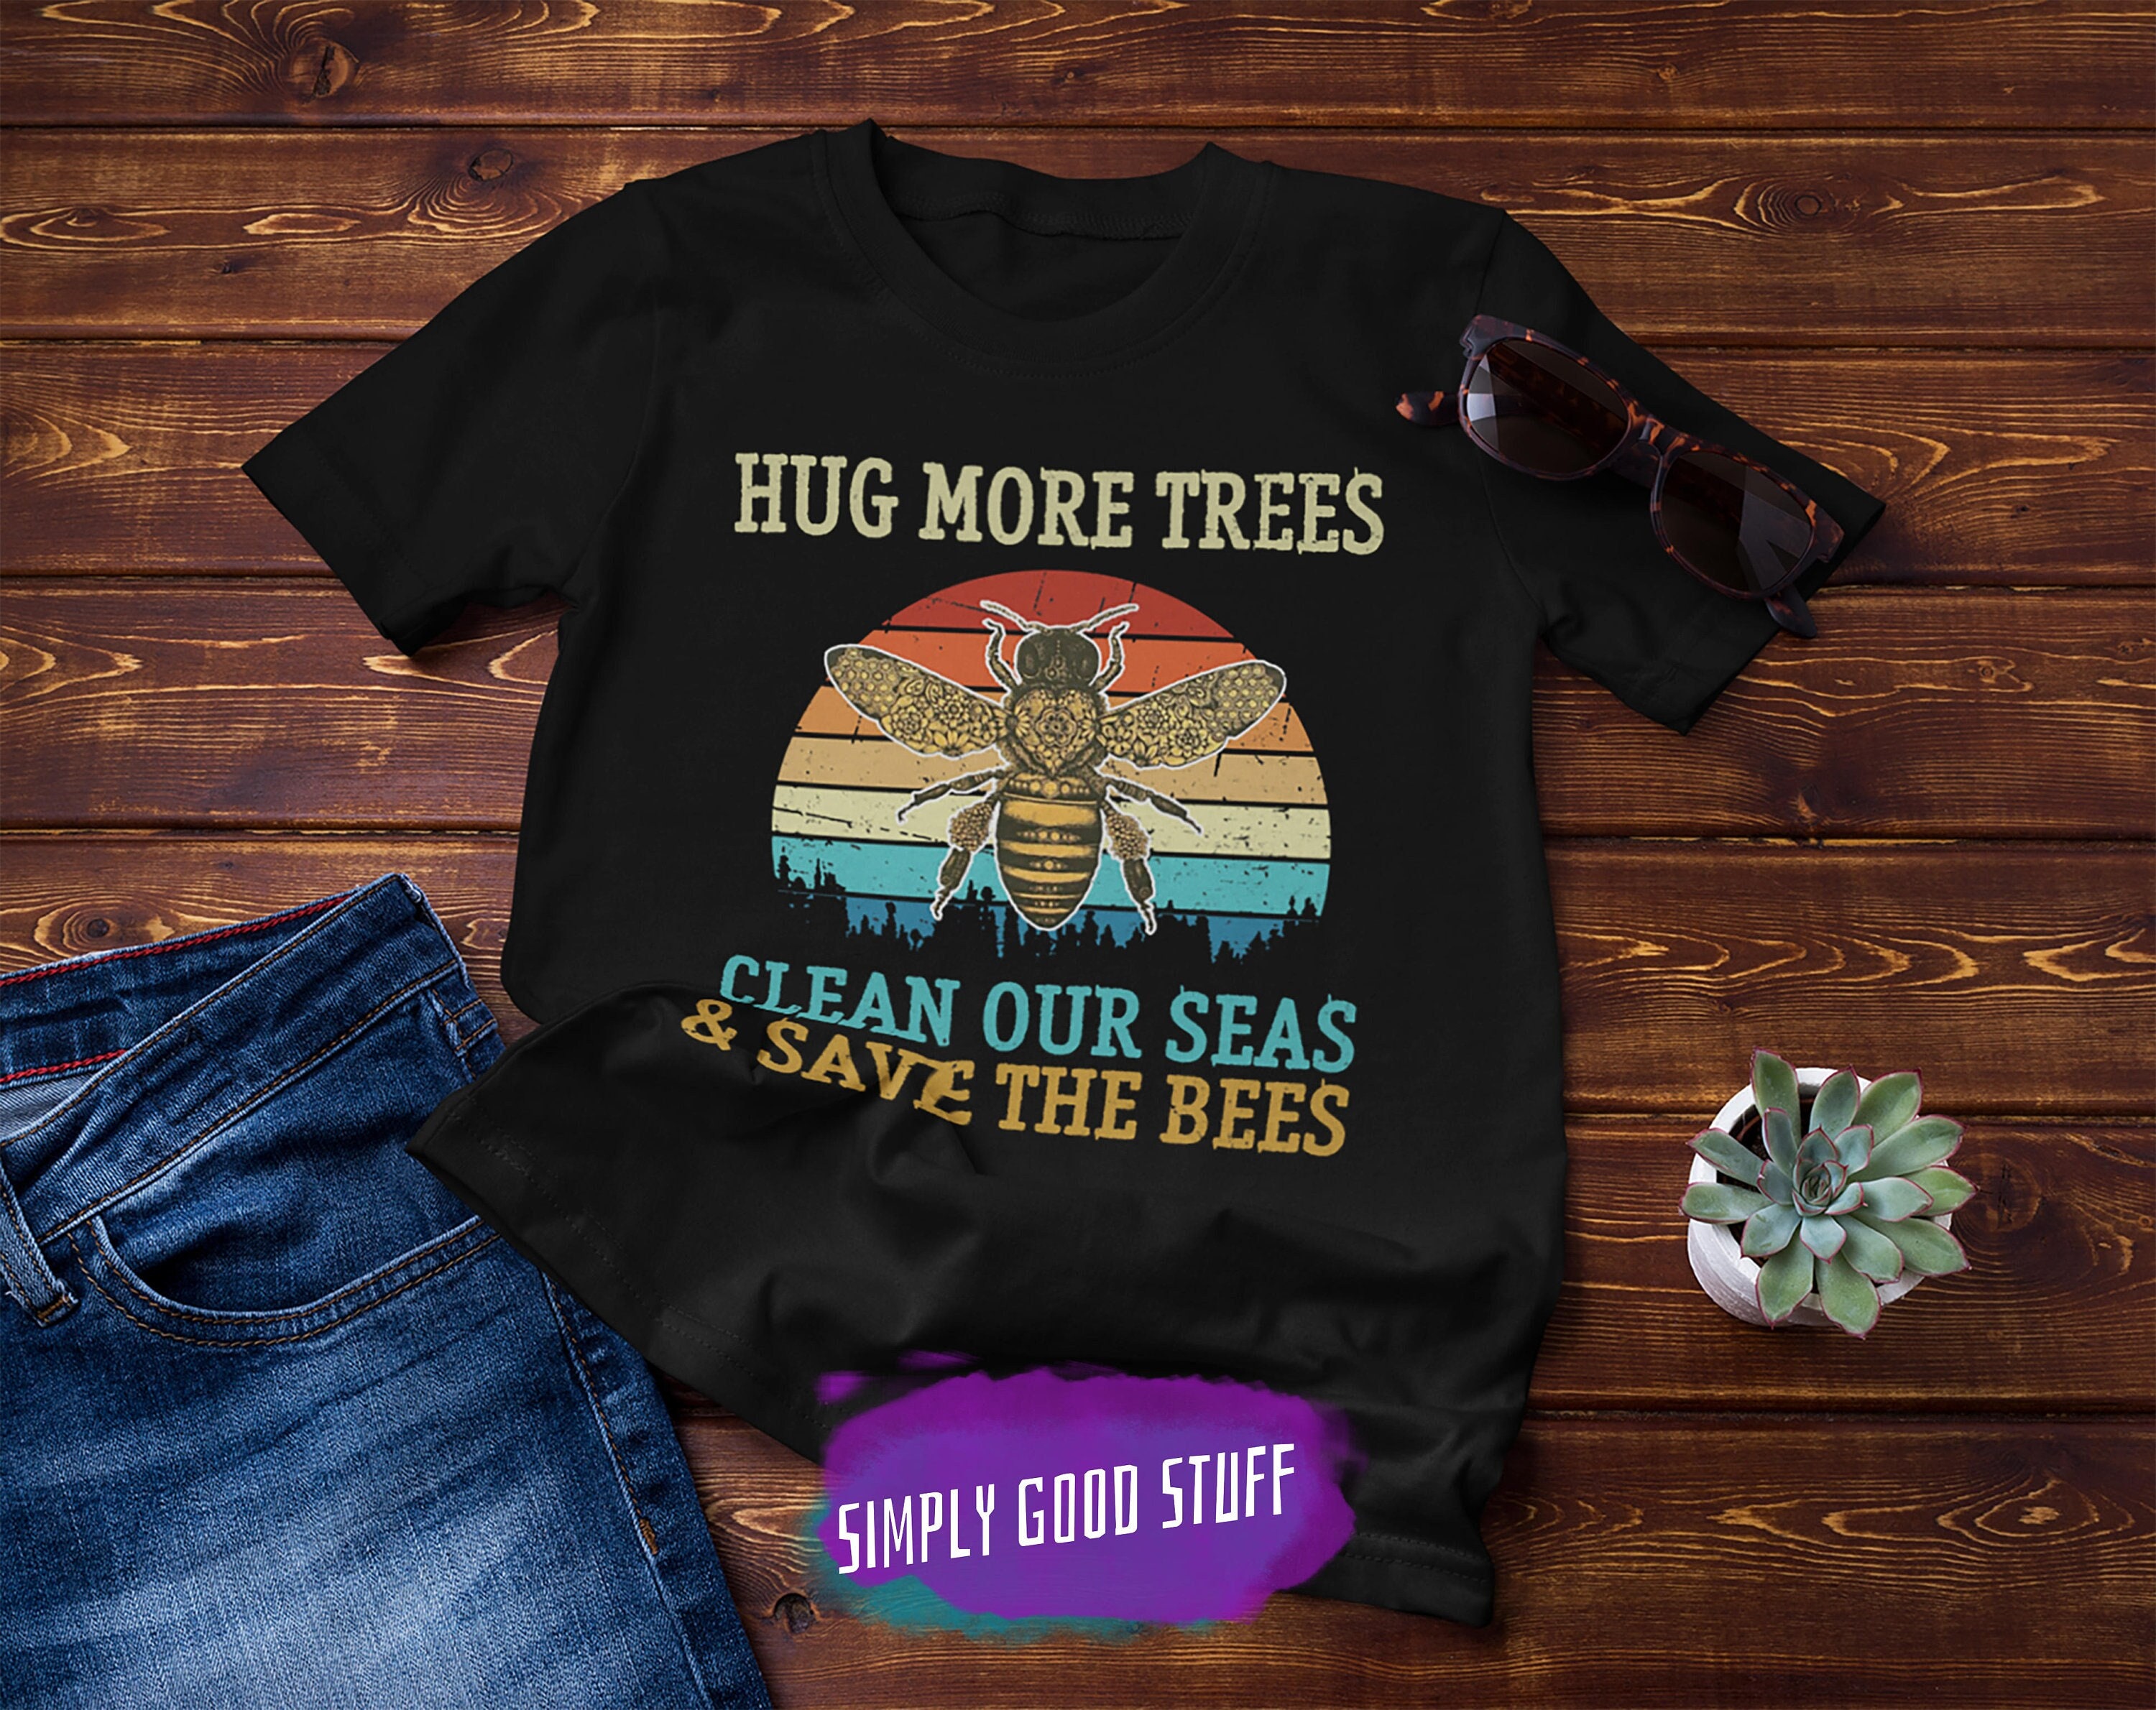 Hug More Trees Clean Our Seas Save The Bees T-shirt Tee Cute Boho Bohemian 